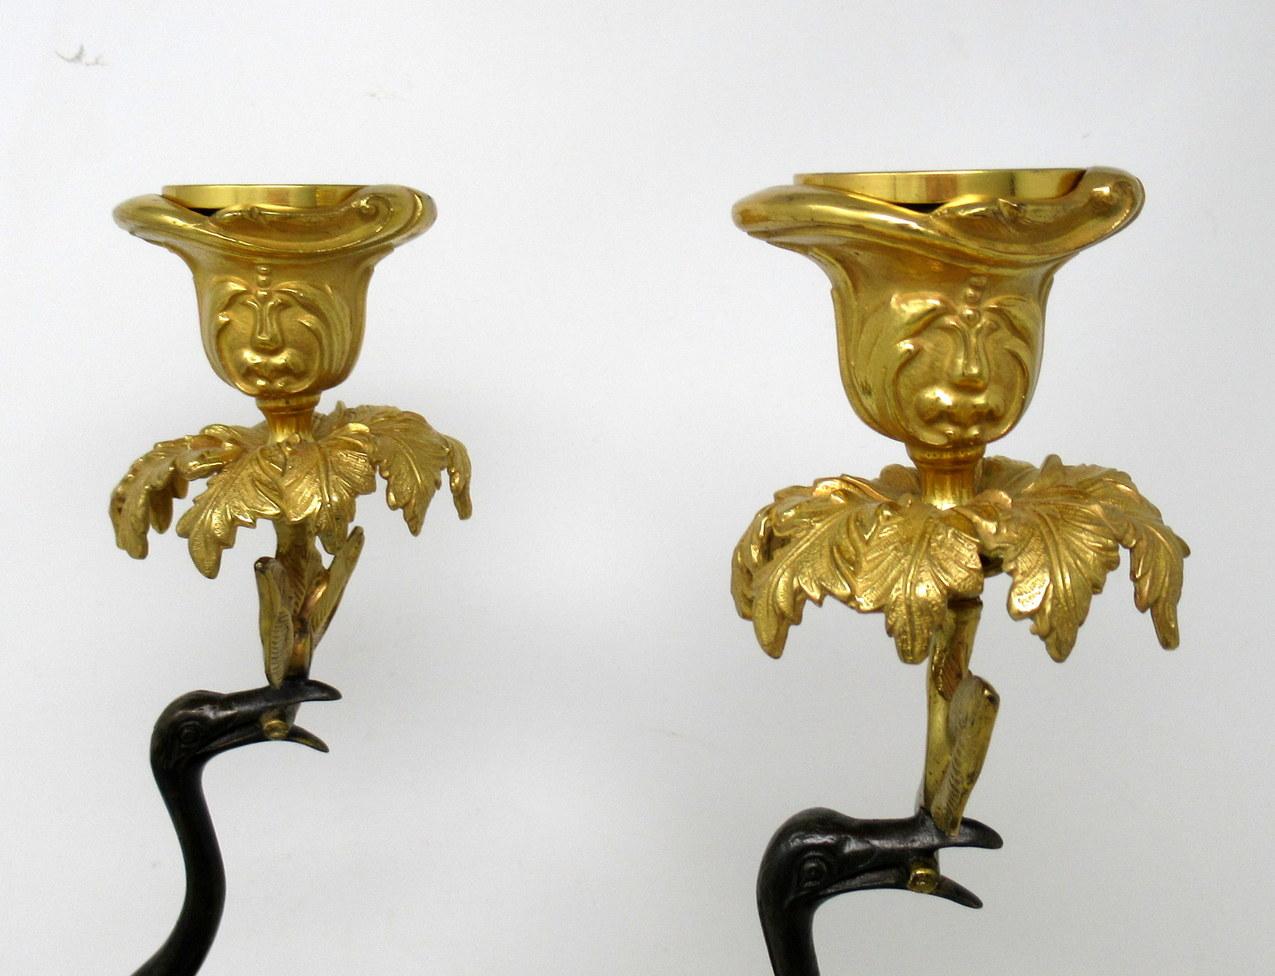 Antique Pair of English Ormolu Gilt Bronze Candlesticks Storks Cranes by Abbott 1